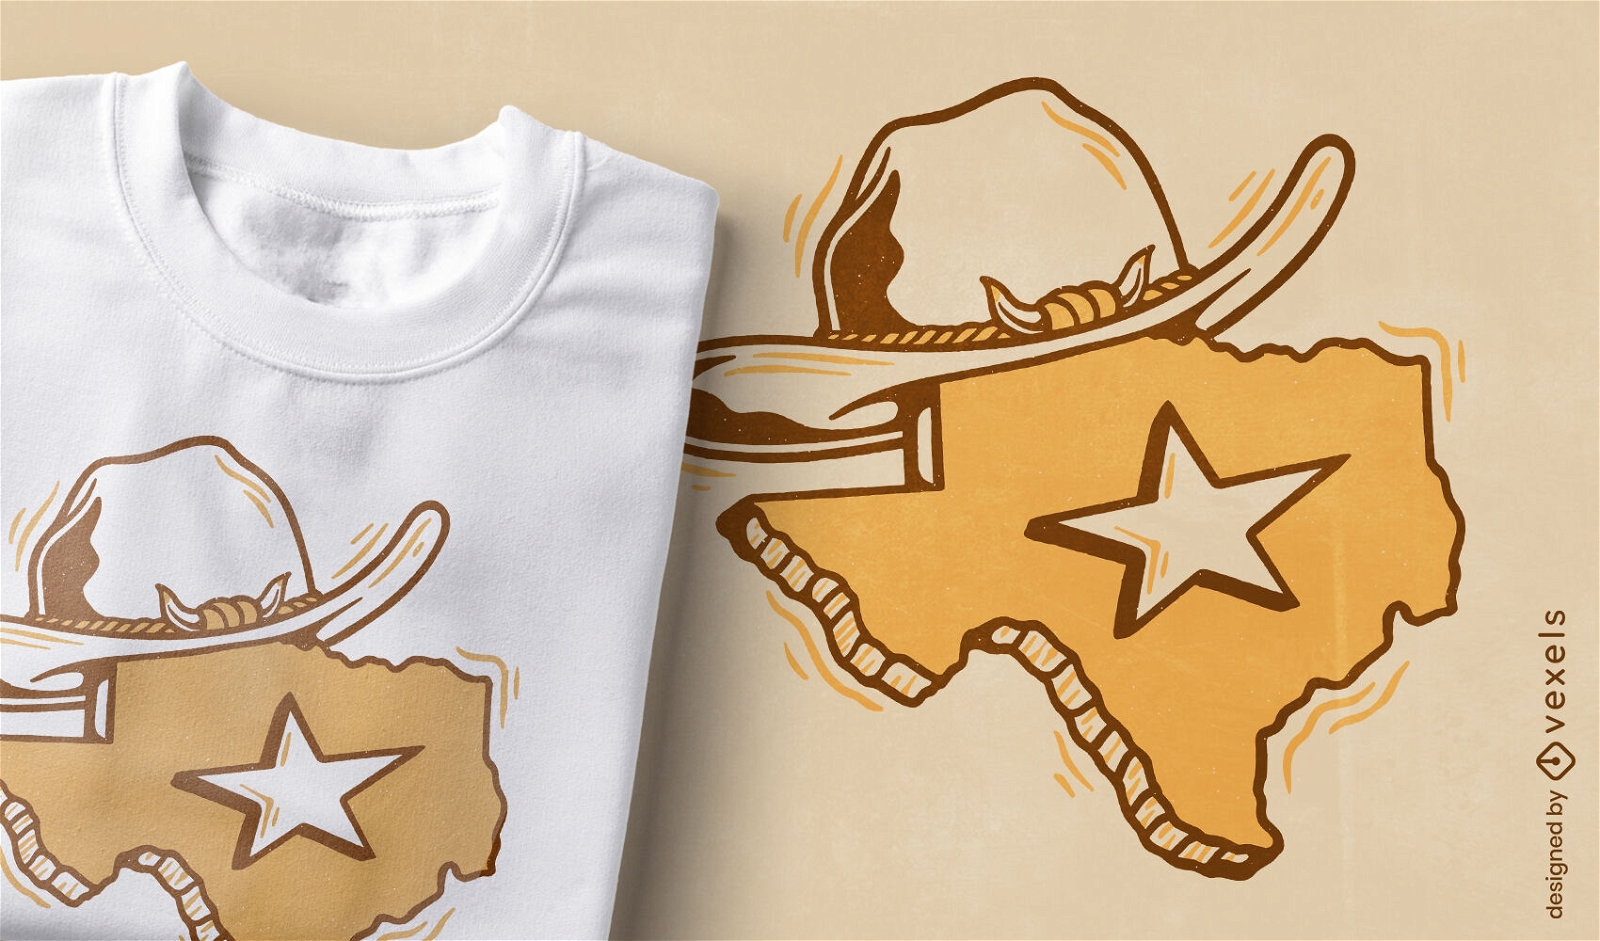 Custom Shirt Design, Texas